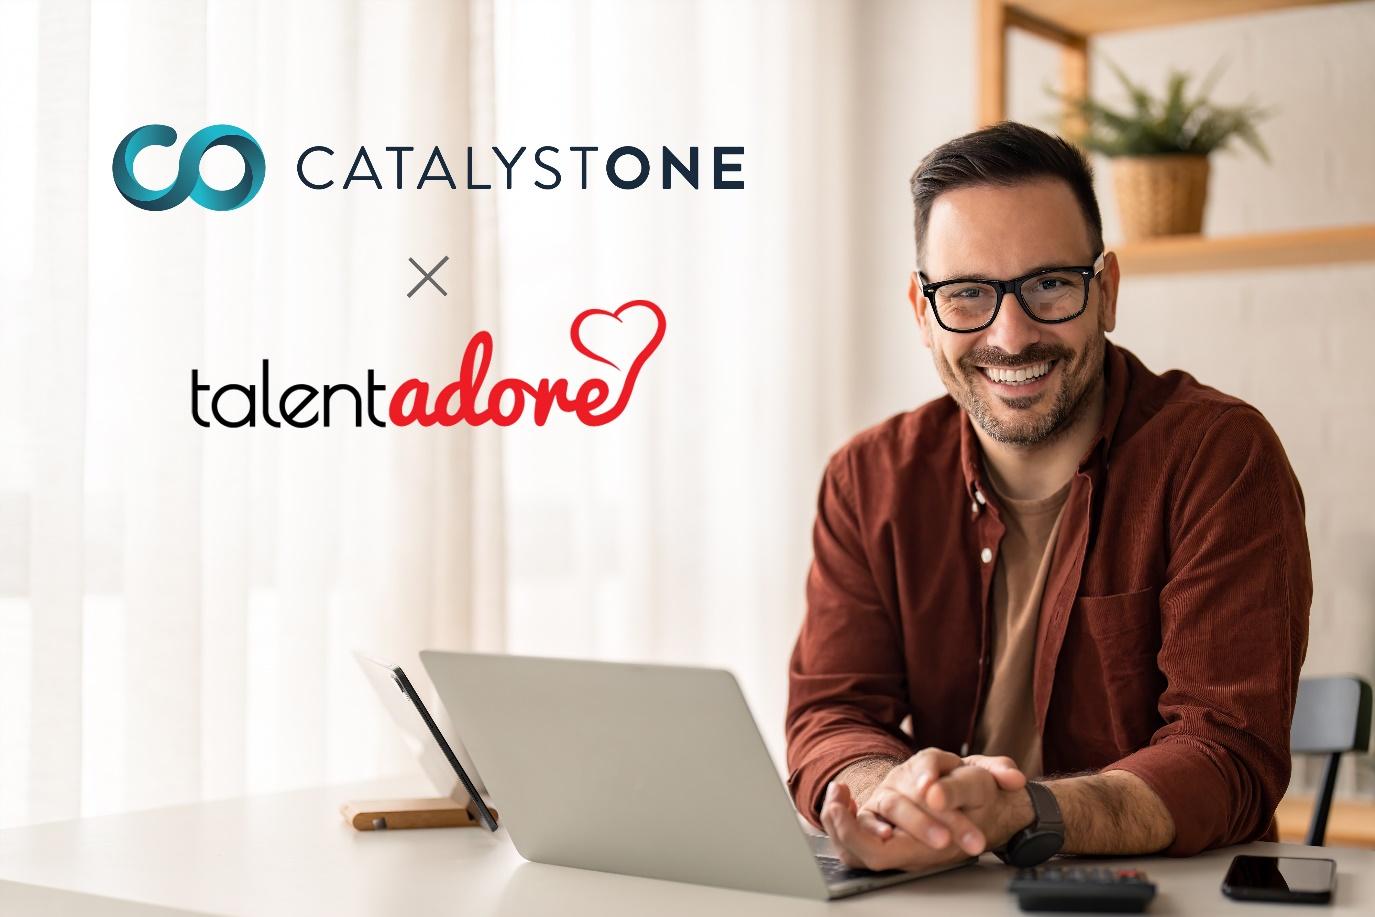 TalentAdore and CatalystOne announce partnership.